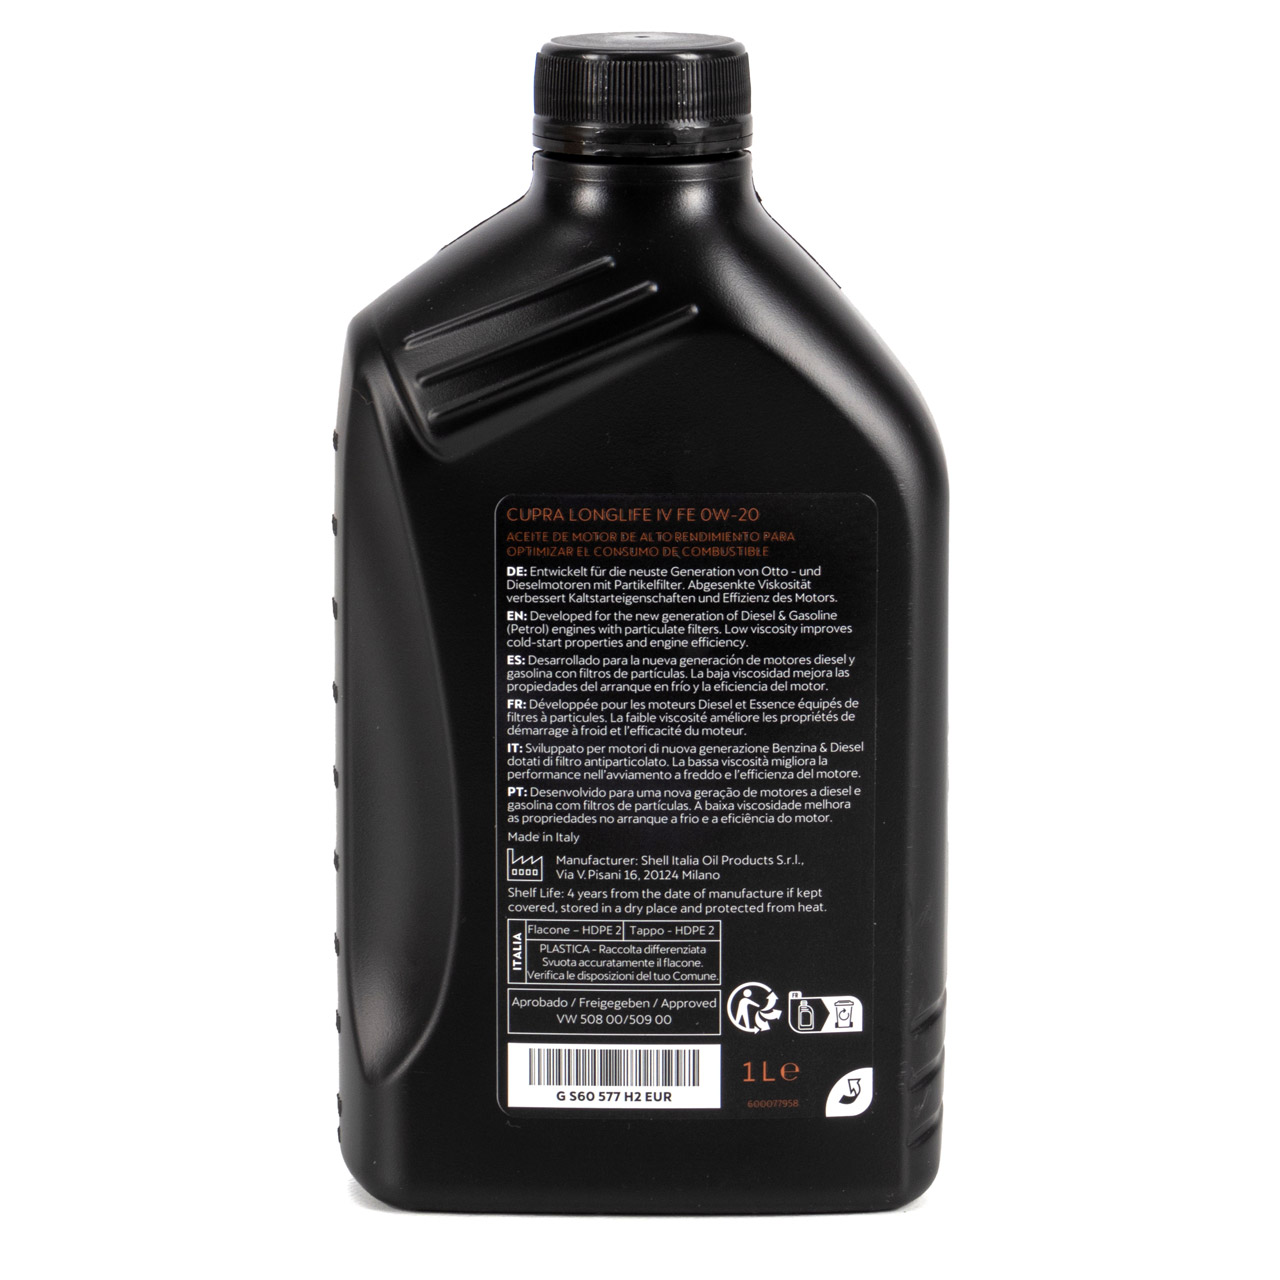 1L 1 Liter ORIGINAL CUPRA Motoröl Öl Longlife 4 IV SAE 0W-20 508.00 509.00 GS60577H2